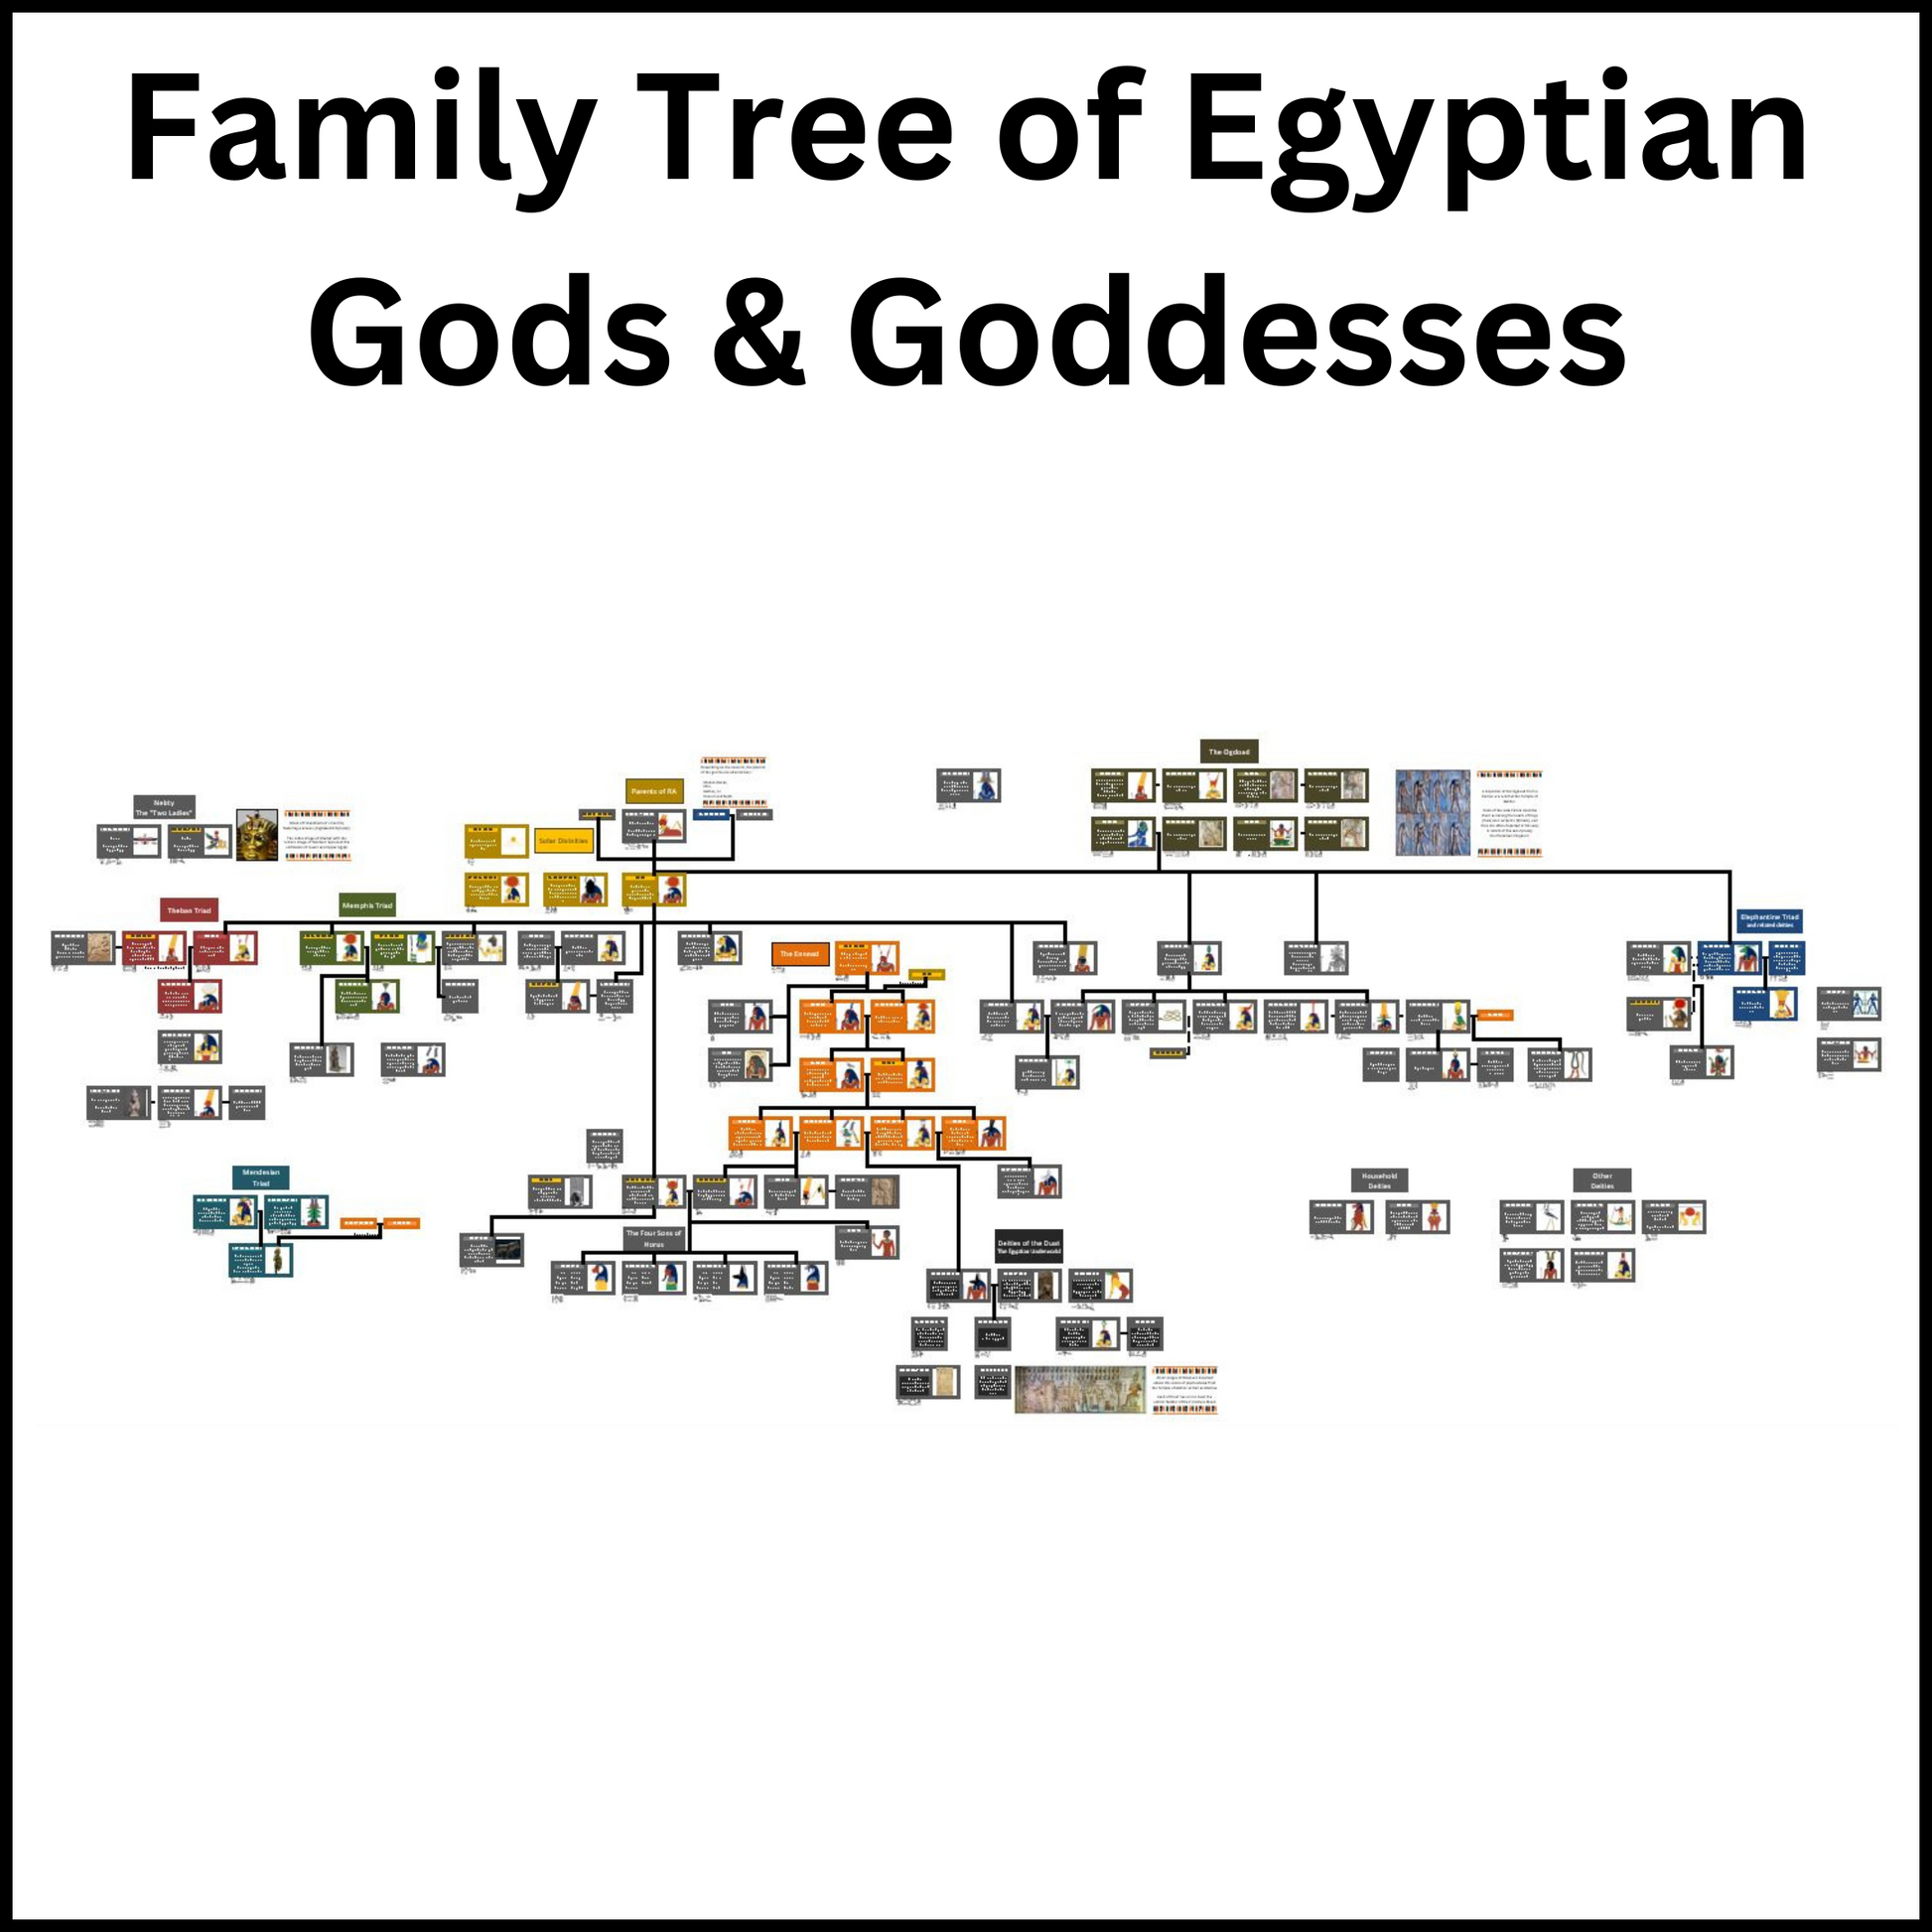 The full Family Tree of the Egyptian Gods and Goddesses.